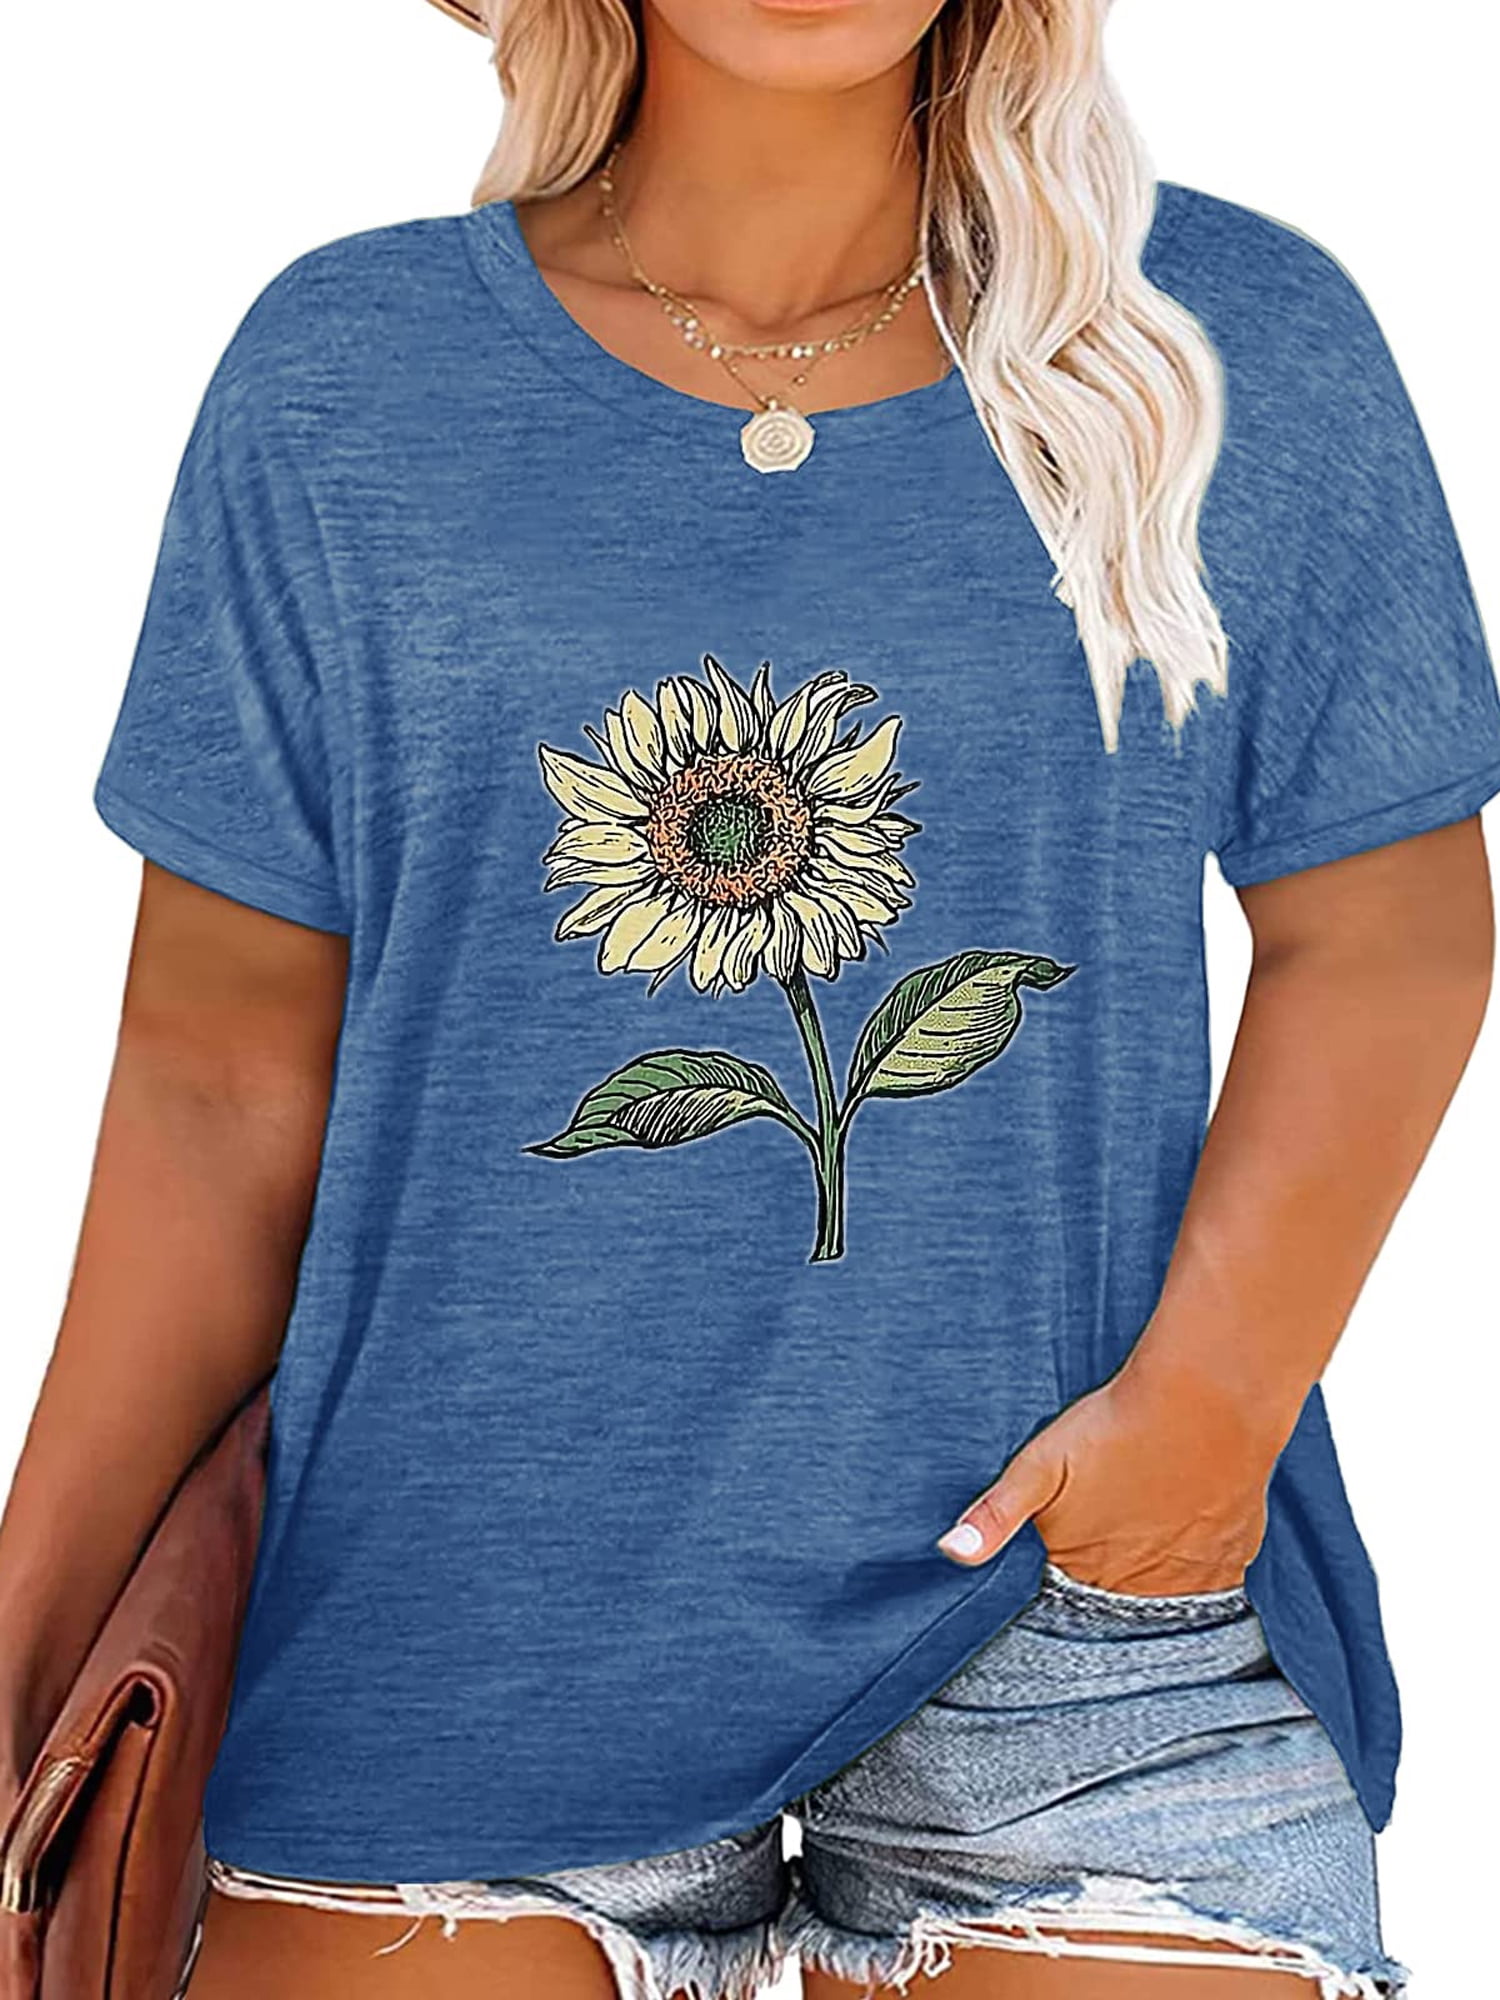 Anbech Sunflower Shirts for Womens Plus Size Short Sleeves T-shirt ...